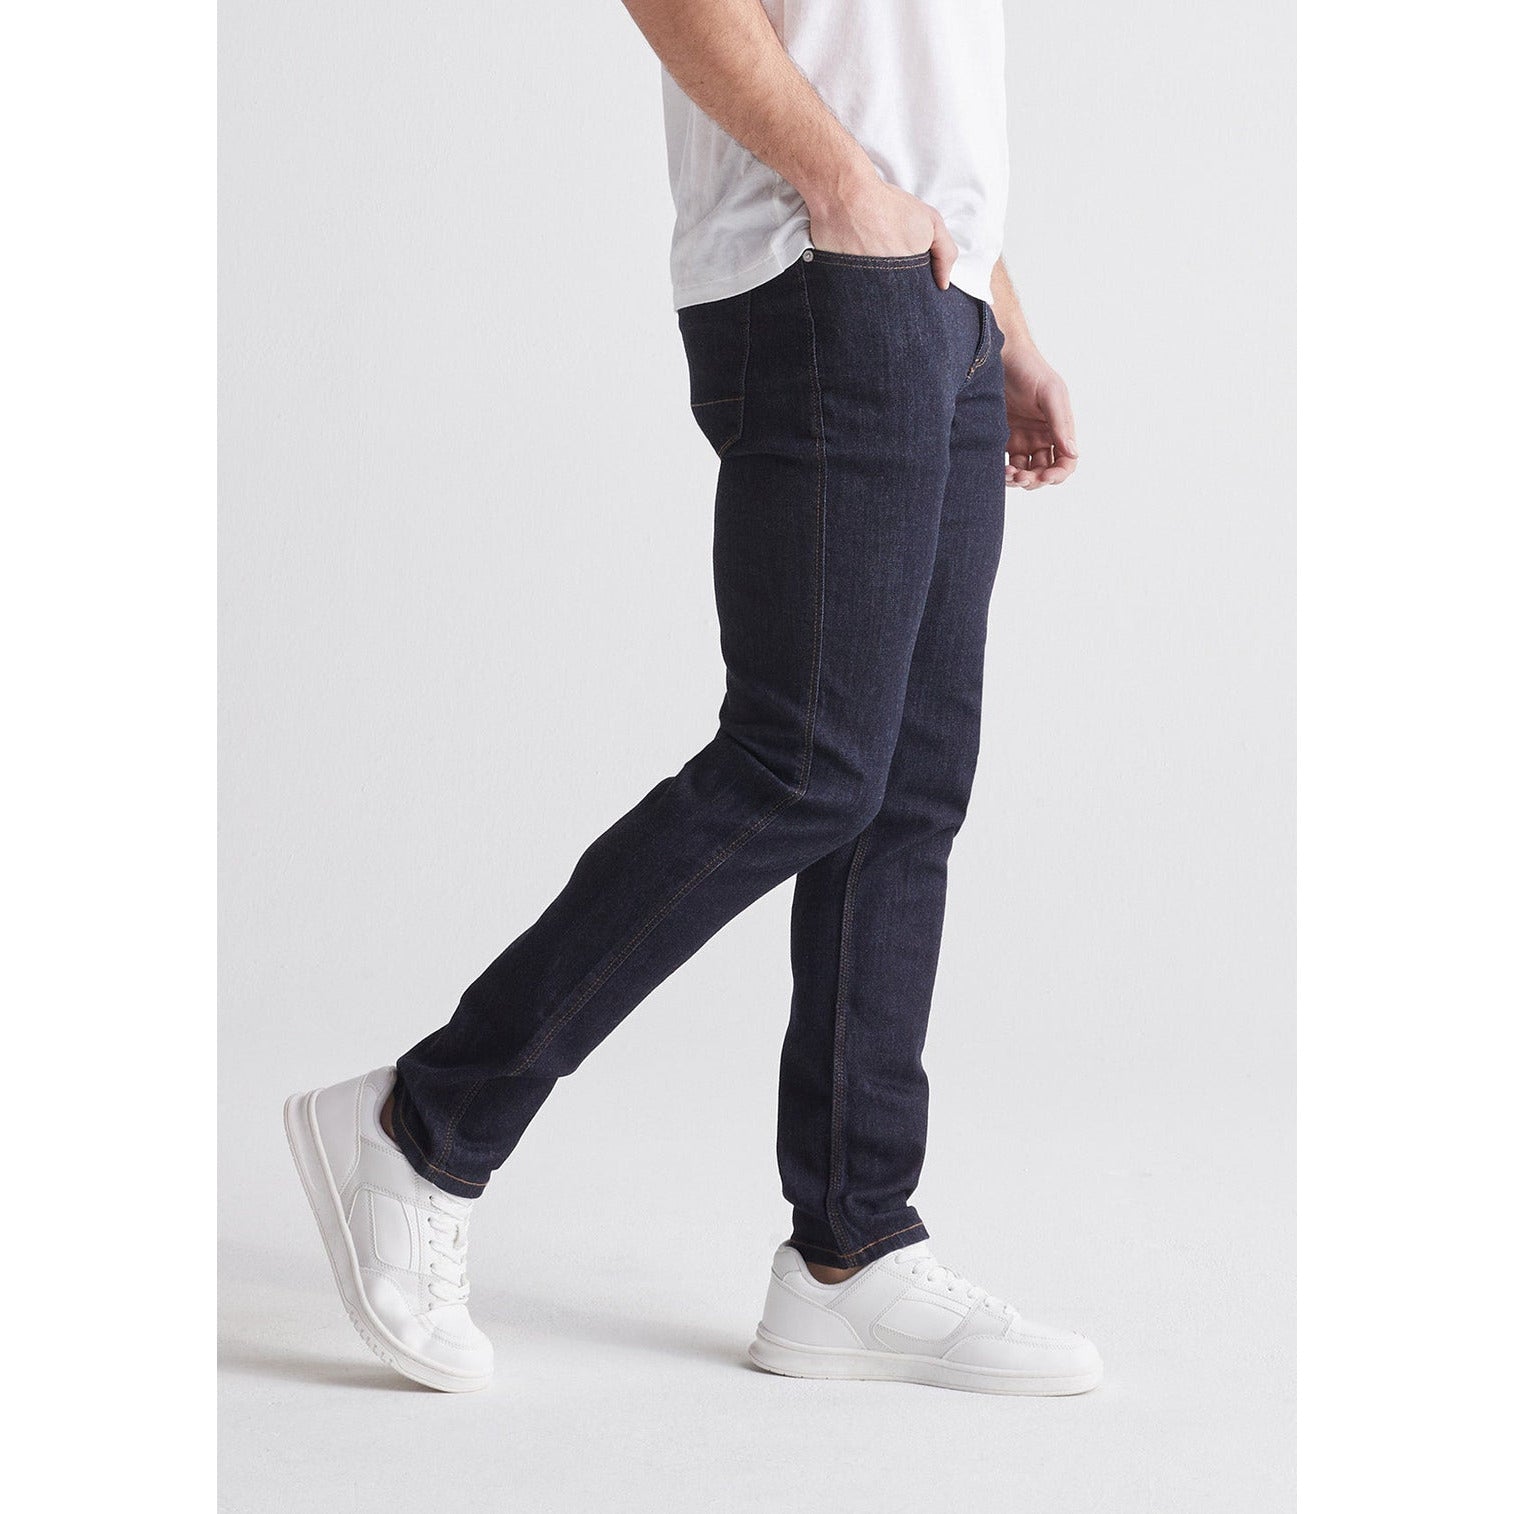 Jeans Performance Denim Slim pour Hommes||Performance Denim Slim for Men's